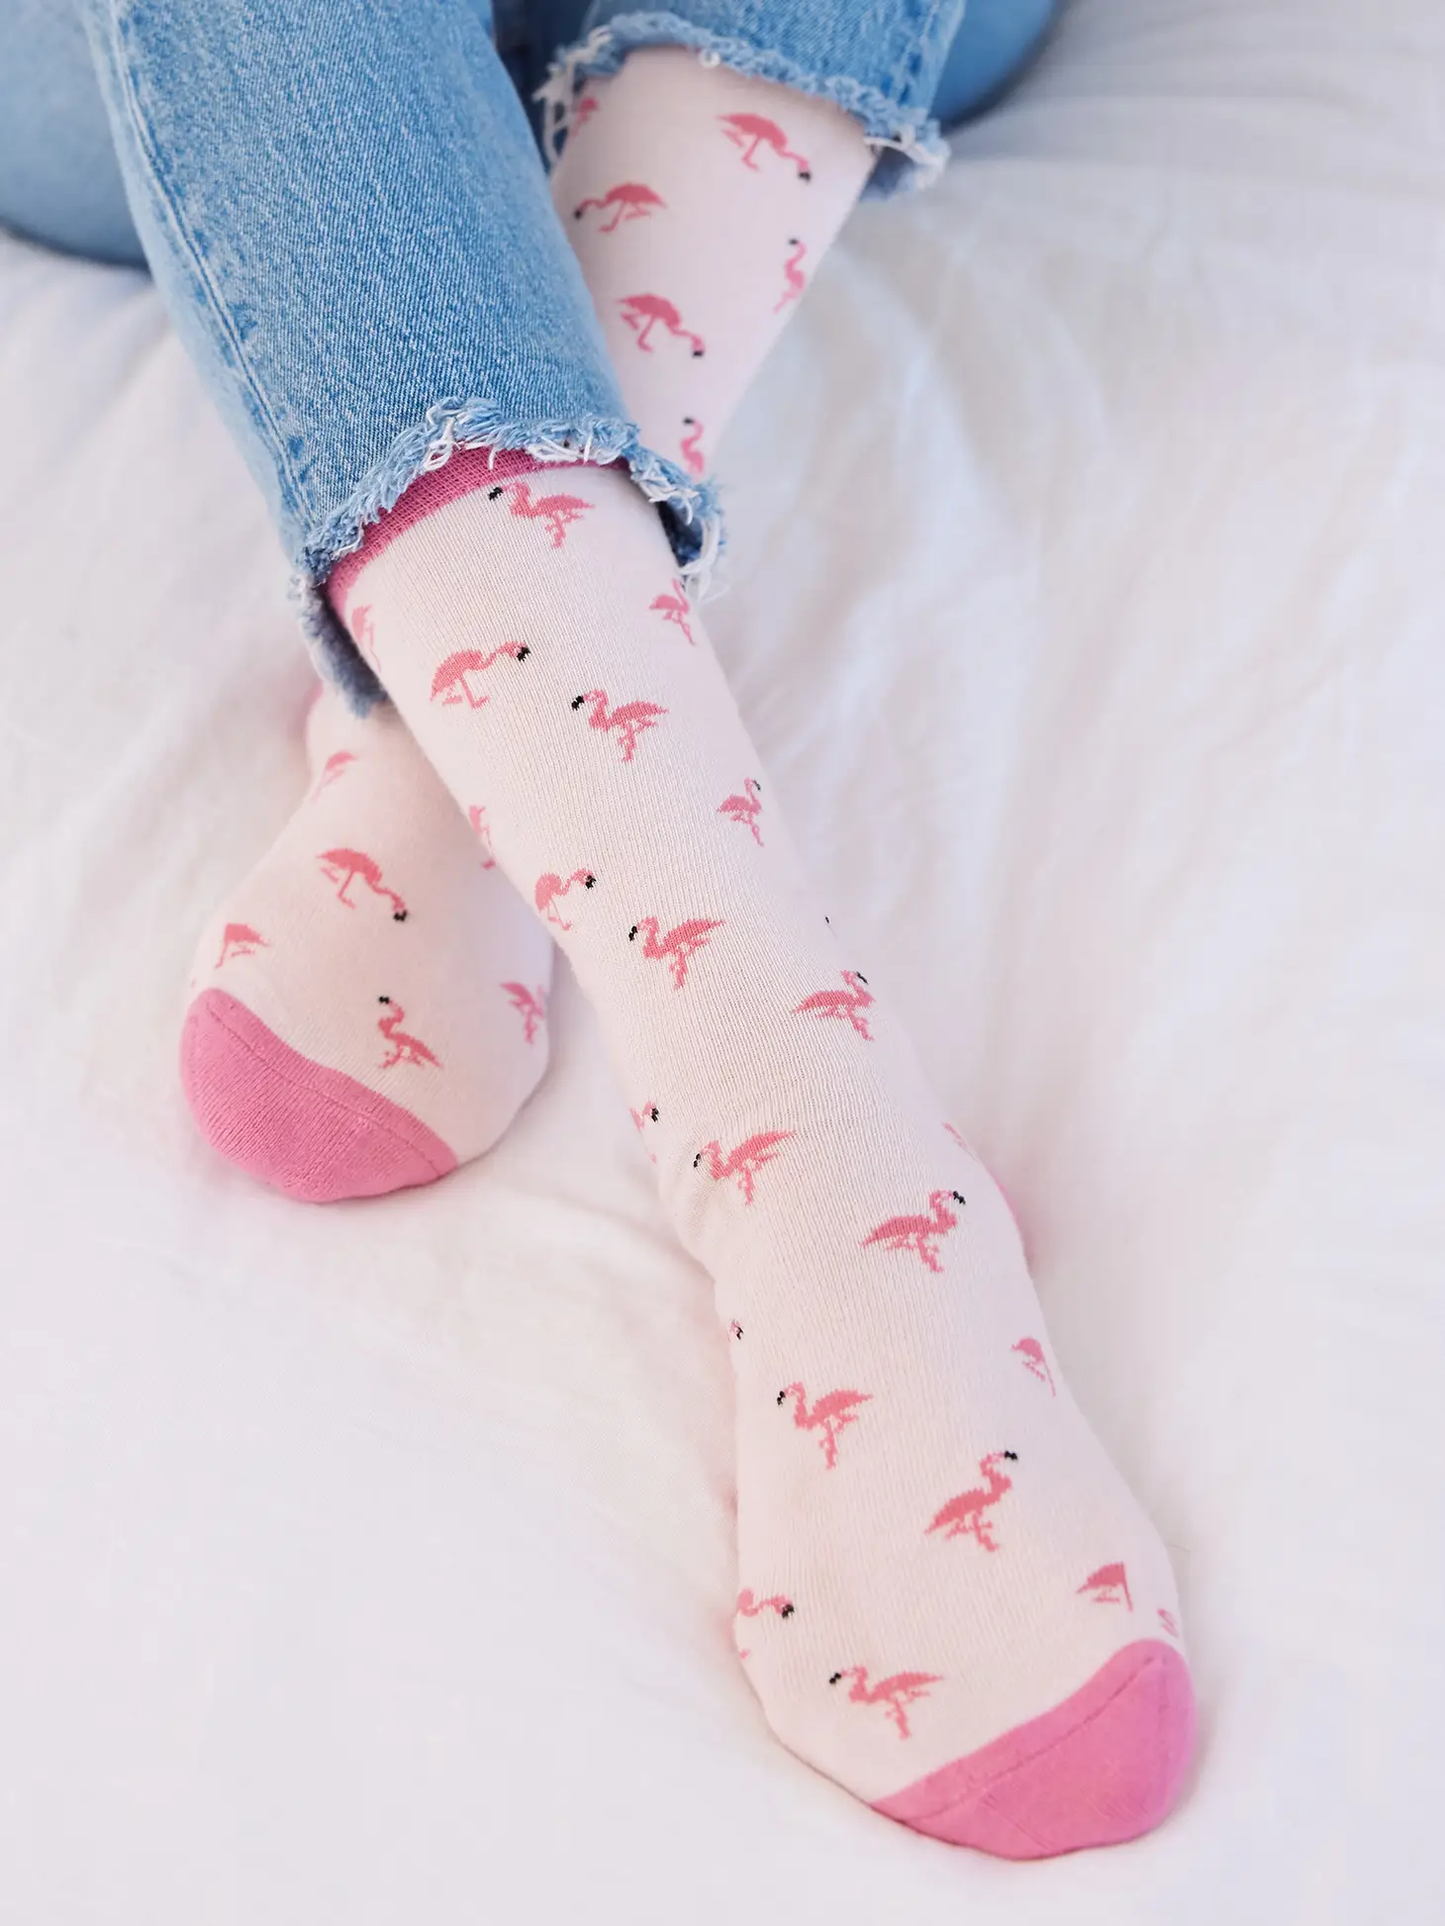 Socks That Protect Flamingos